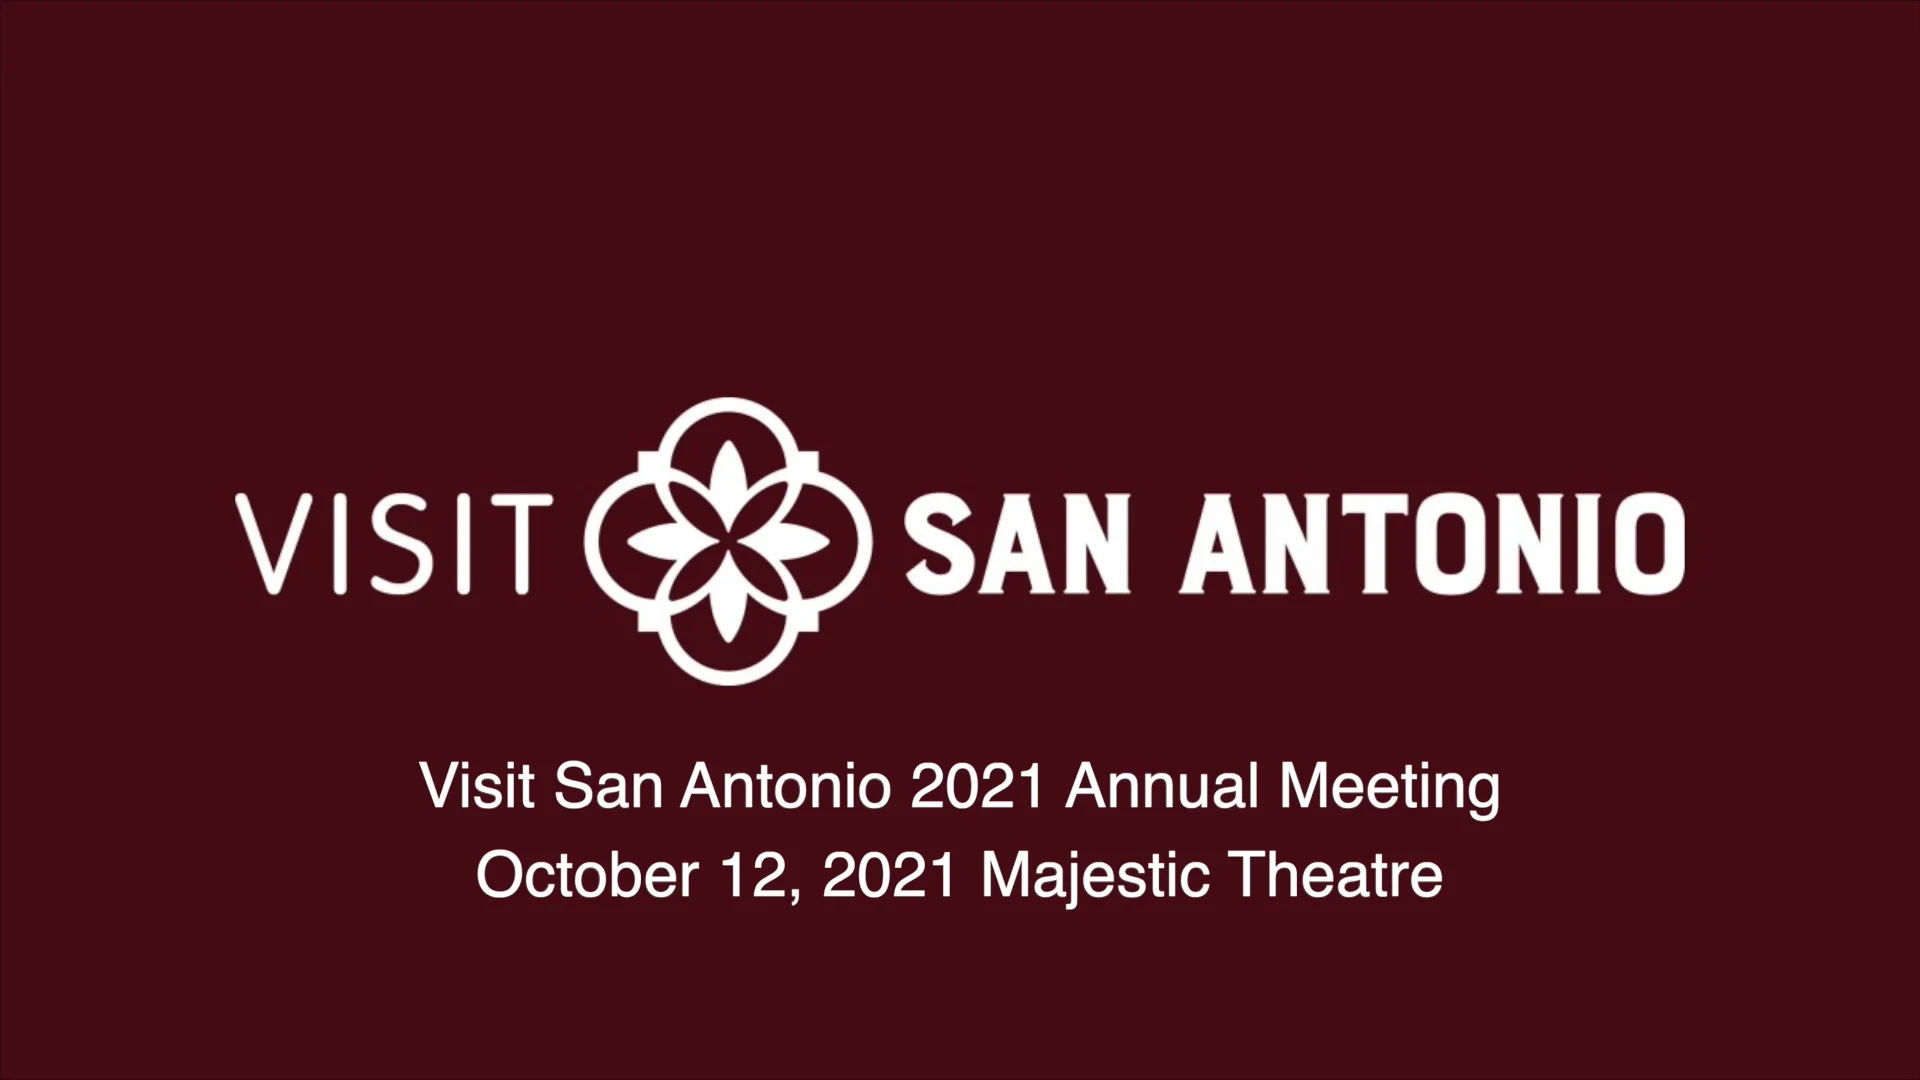 Visit San Antonio 2021 Annual Meeting